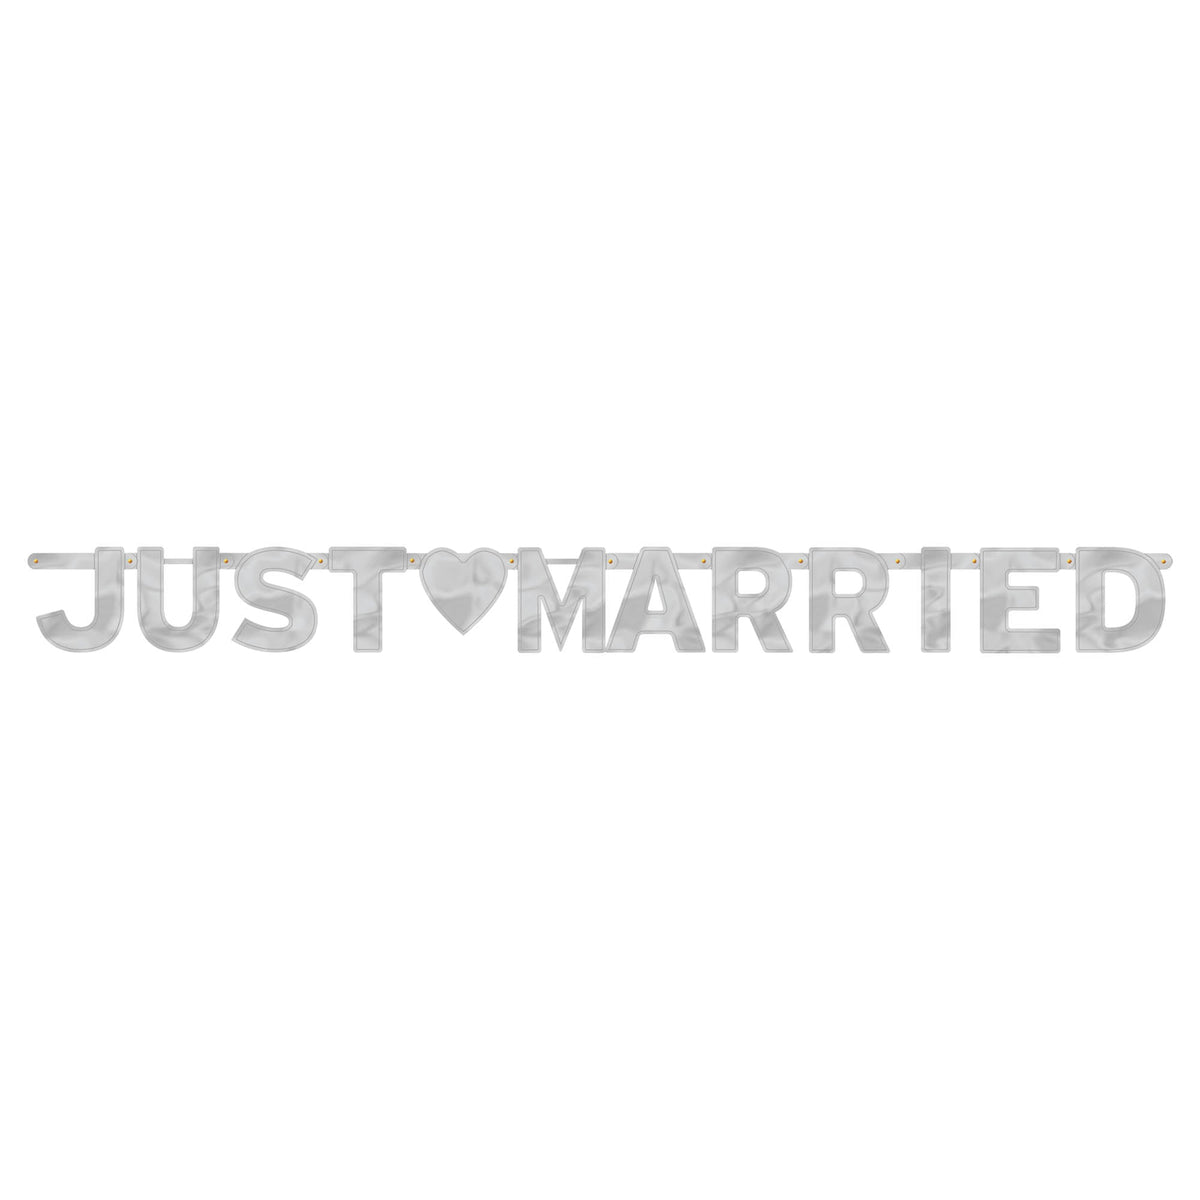 Just Married 5 1/2' x 6 1/4"  Foil Letter Banner